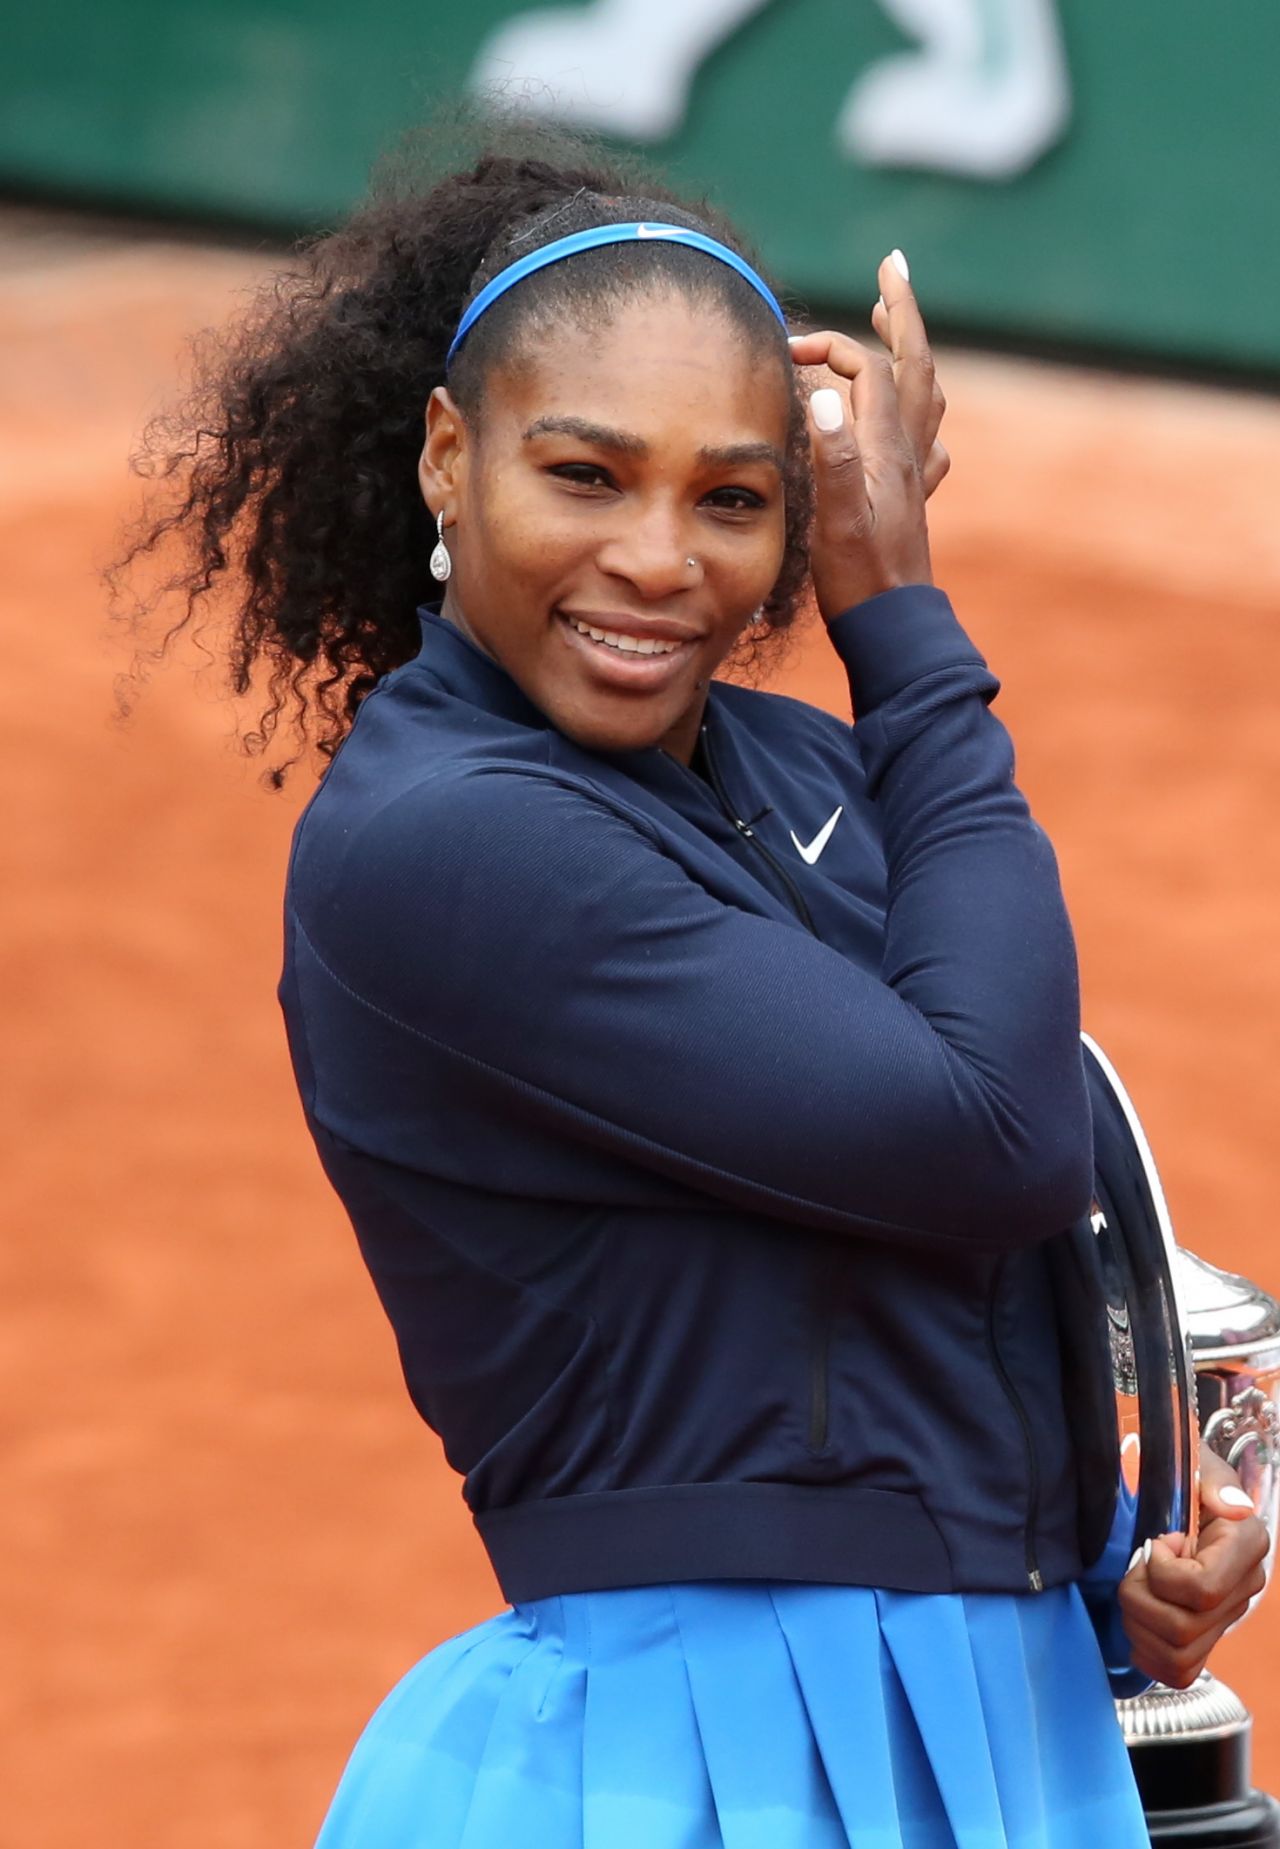 Serena Williams - 2016 French Open Final Match at Roland Garros in Paris1280 x 1849